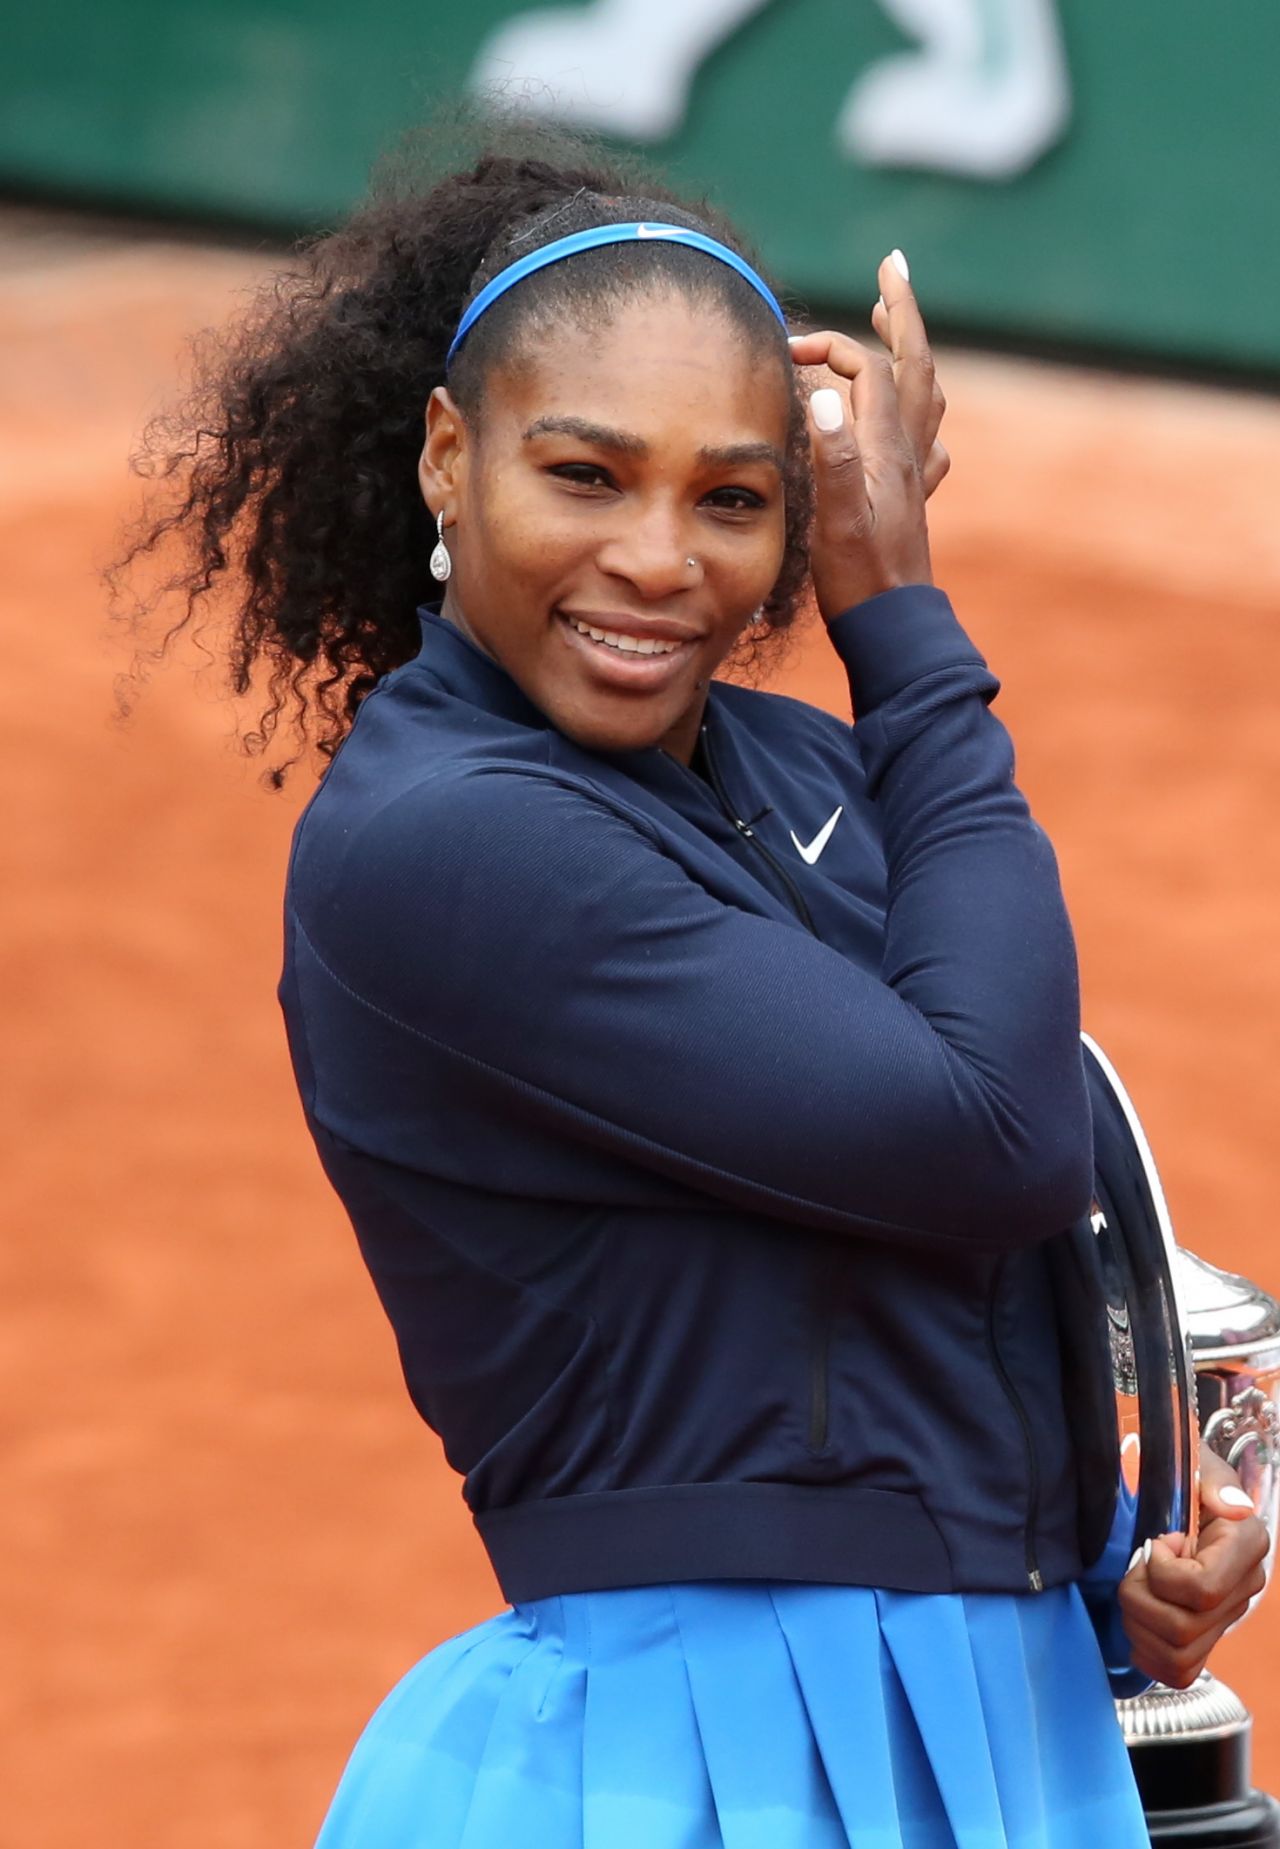 Serena Williams - 2016 French Open Final Match at Roland Garros in Paris1280 x 1849